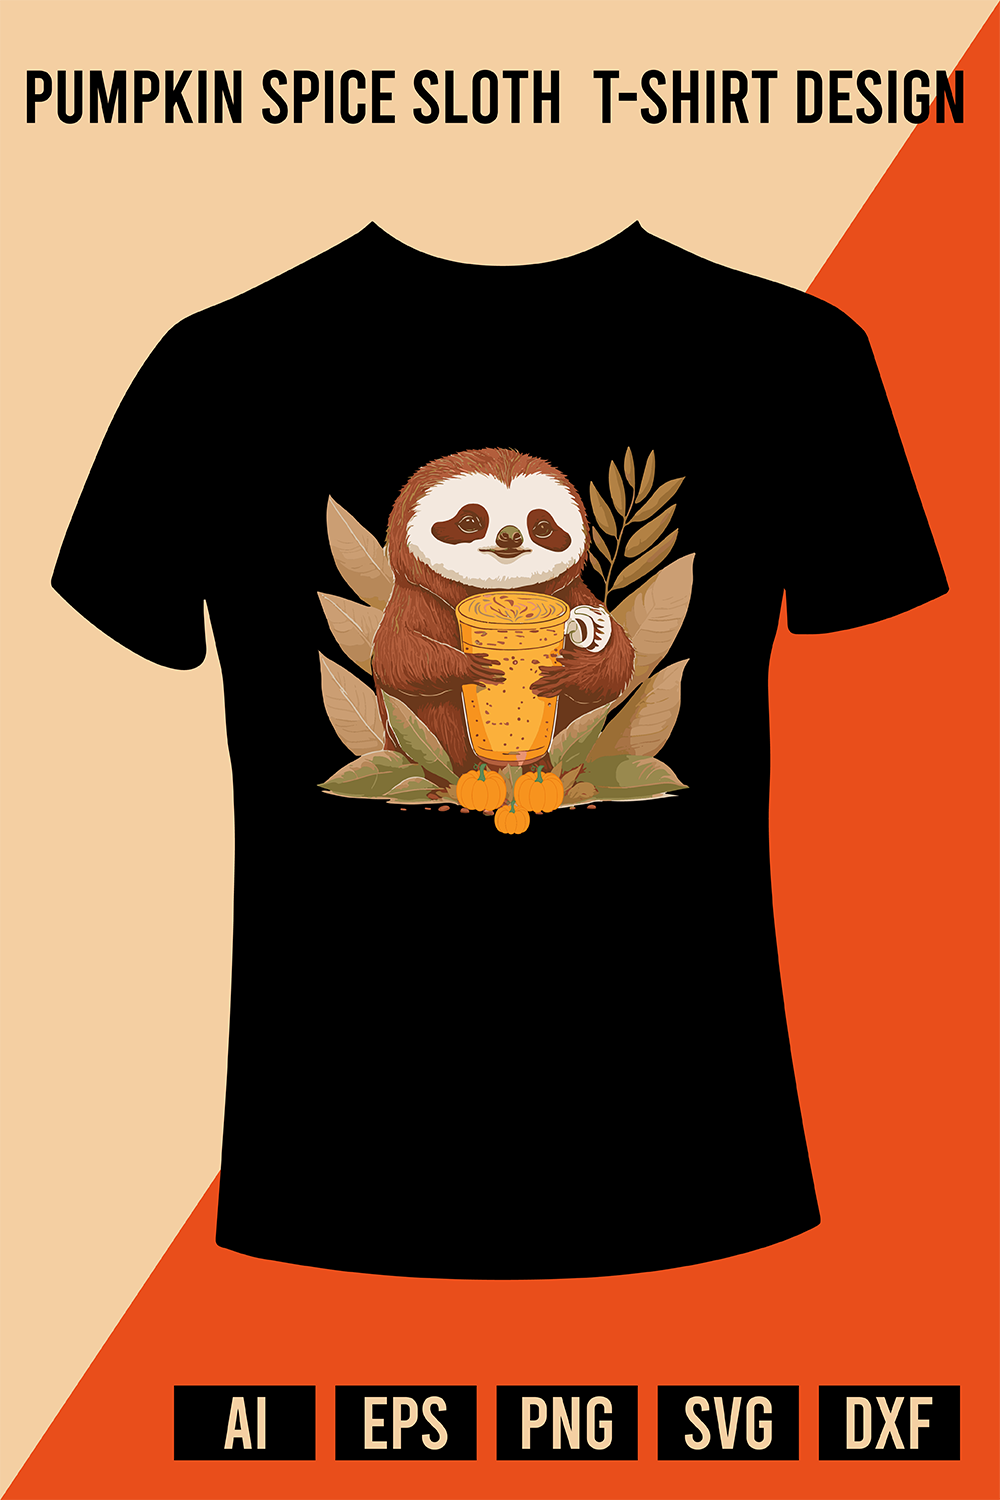 Pumpkin Spice Sloth T-Shirt Design pinterest preview image.